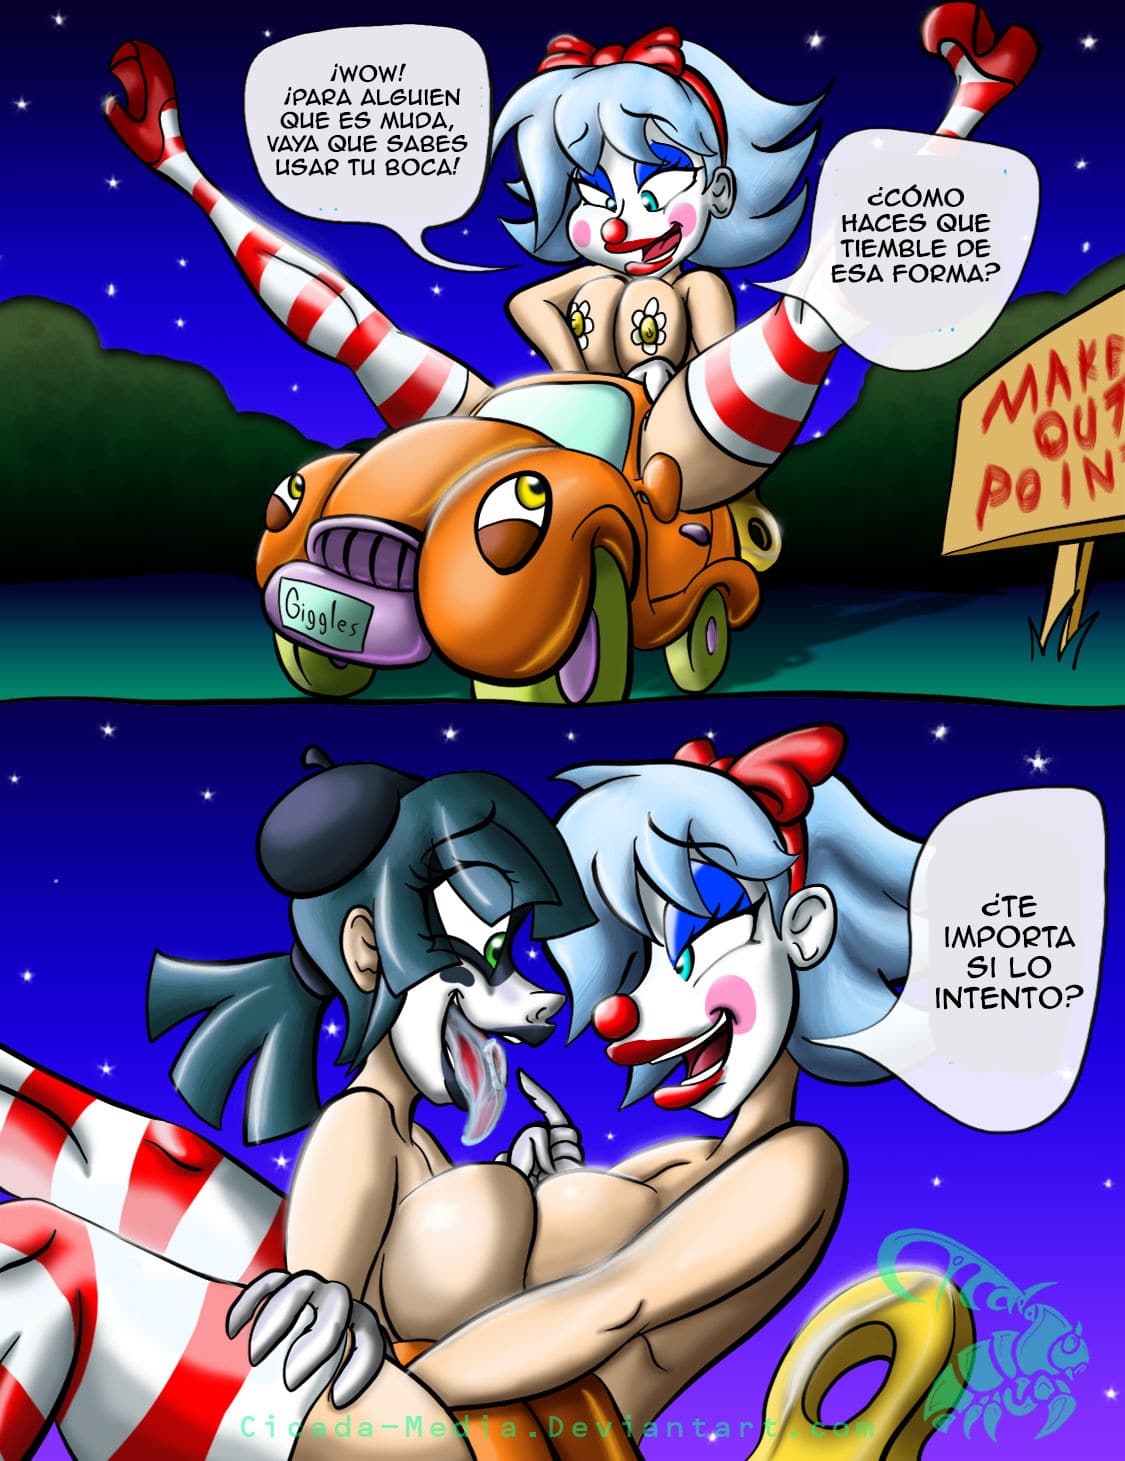 Giggles The Slutty Clown Página 2 De 3 